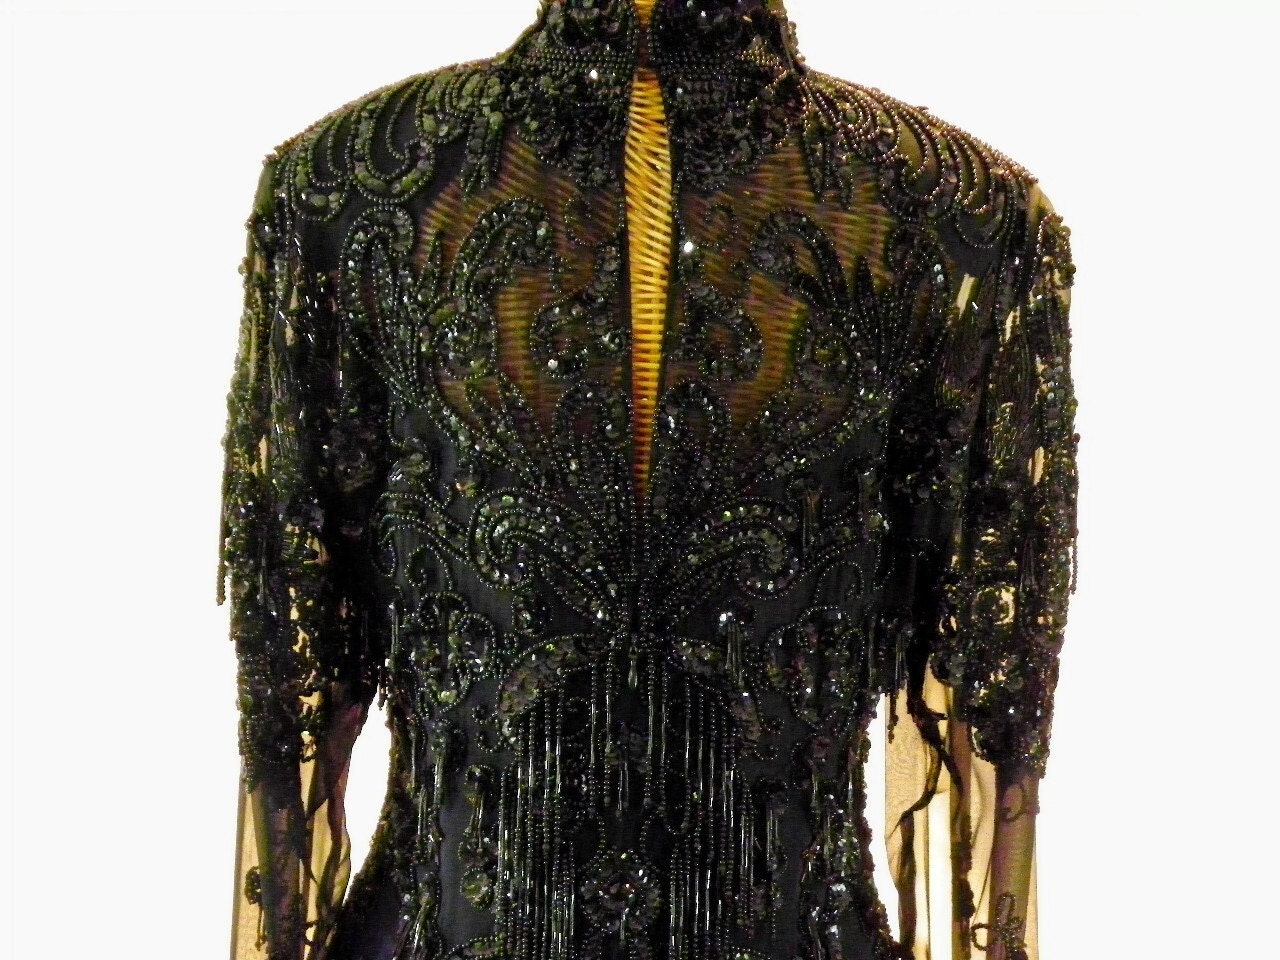 Vintage Silk Black Sheer Bodice Open Back Chandelier Beading Sequins Evening Gown Floor Length Size 12 on Etsy